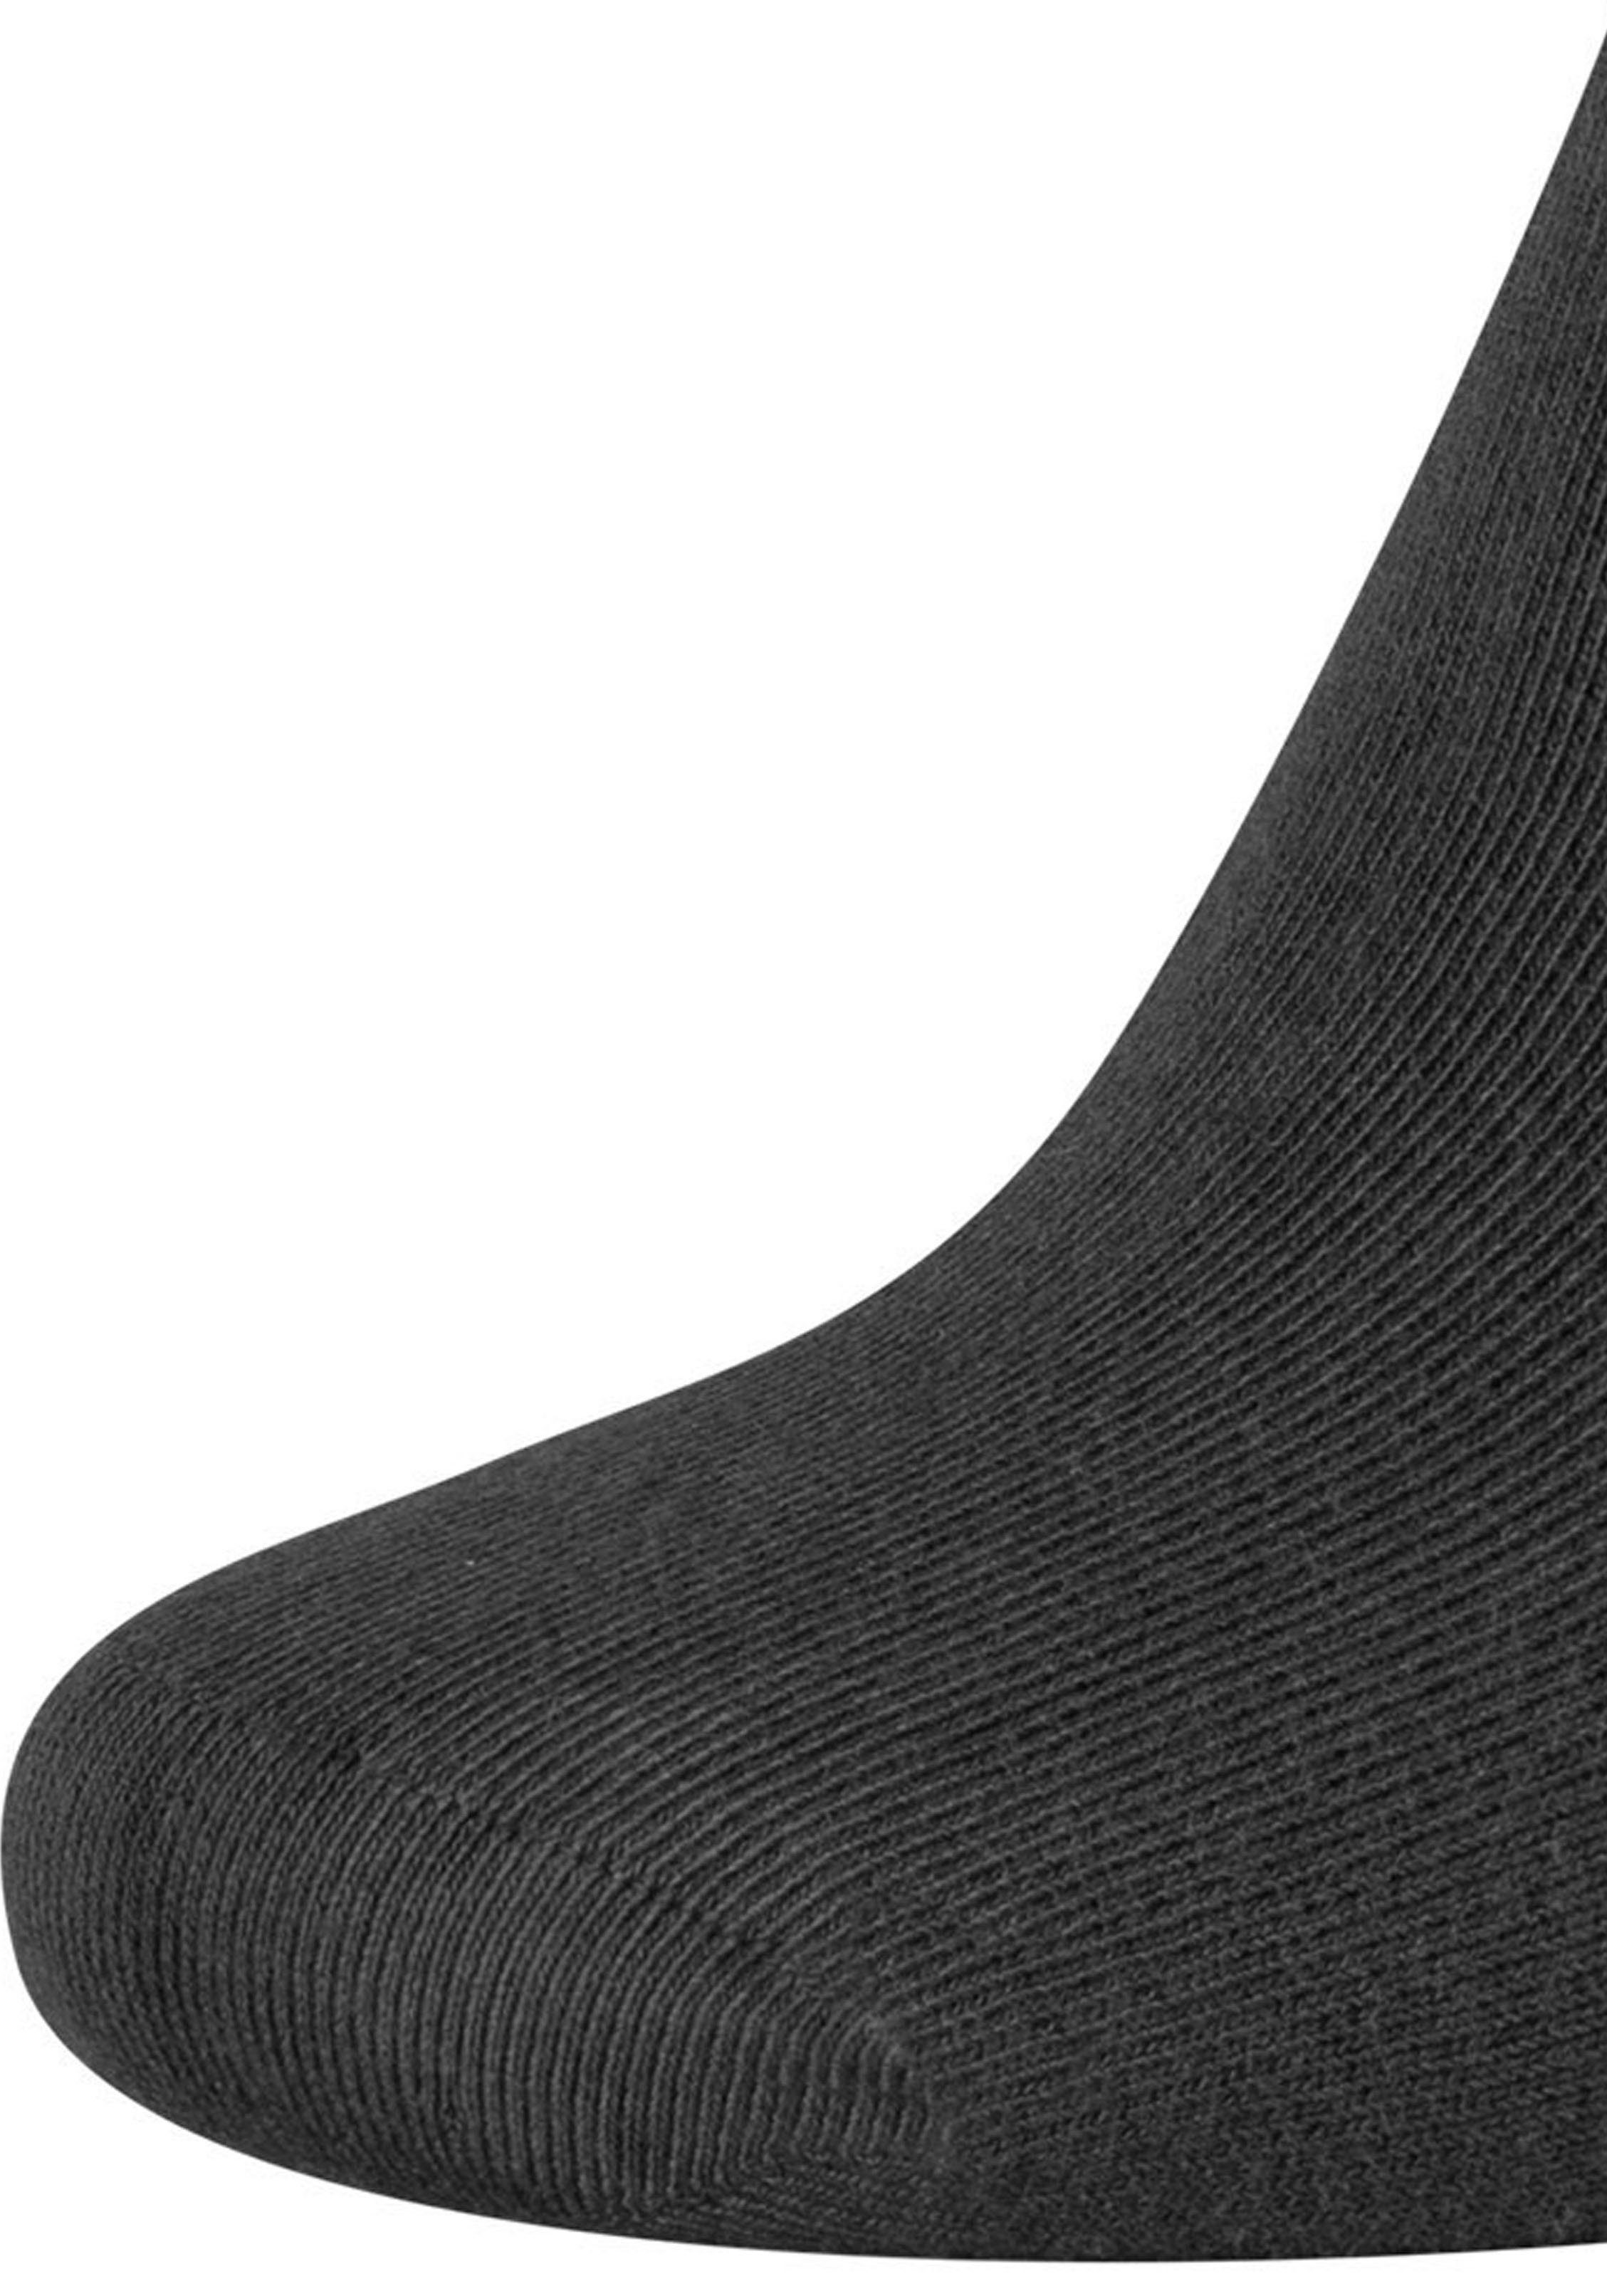 Camano Socken (Packung, 9-Paar) Langlebig: schwarz und Fersen- verstärkter Zehenbereich